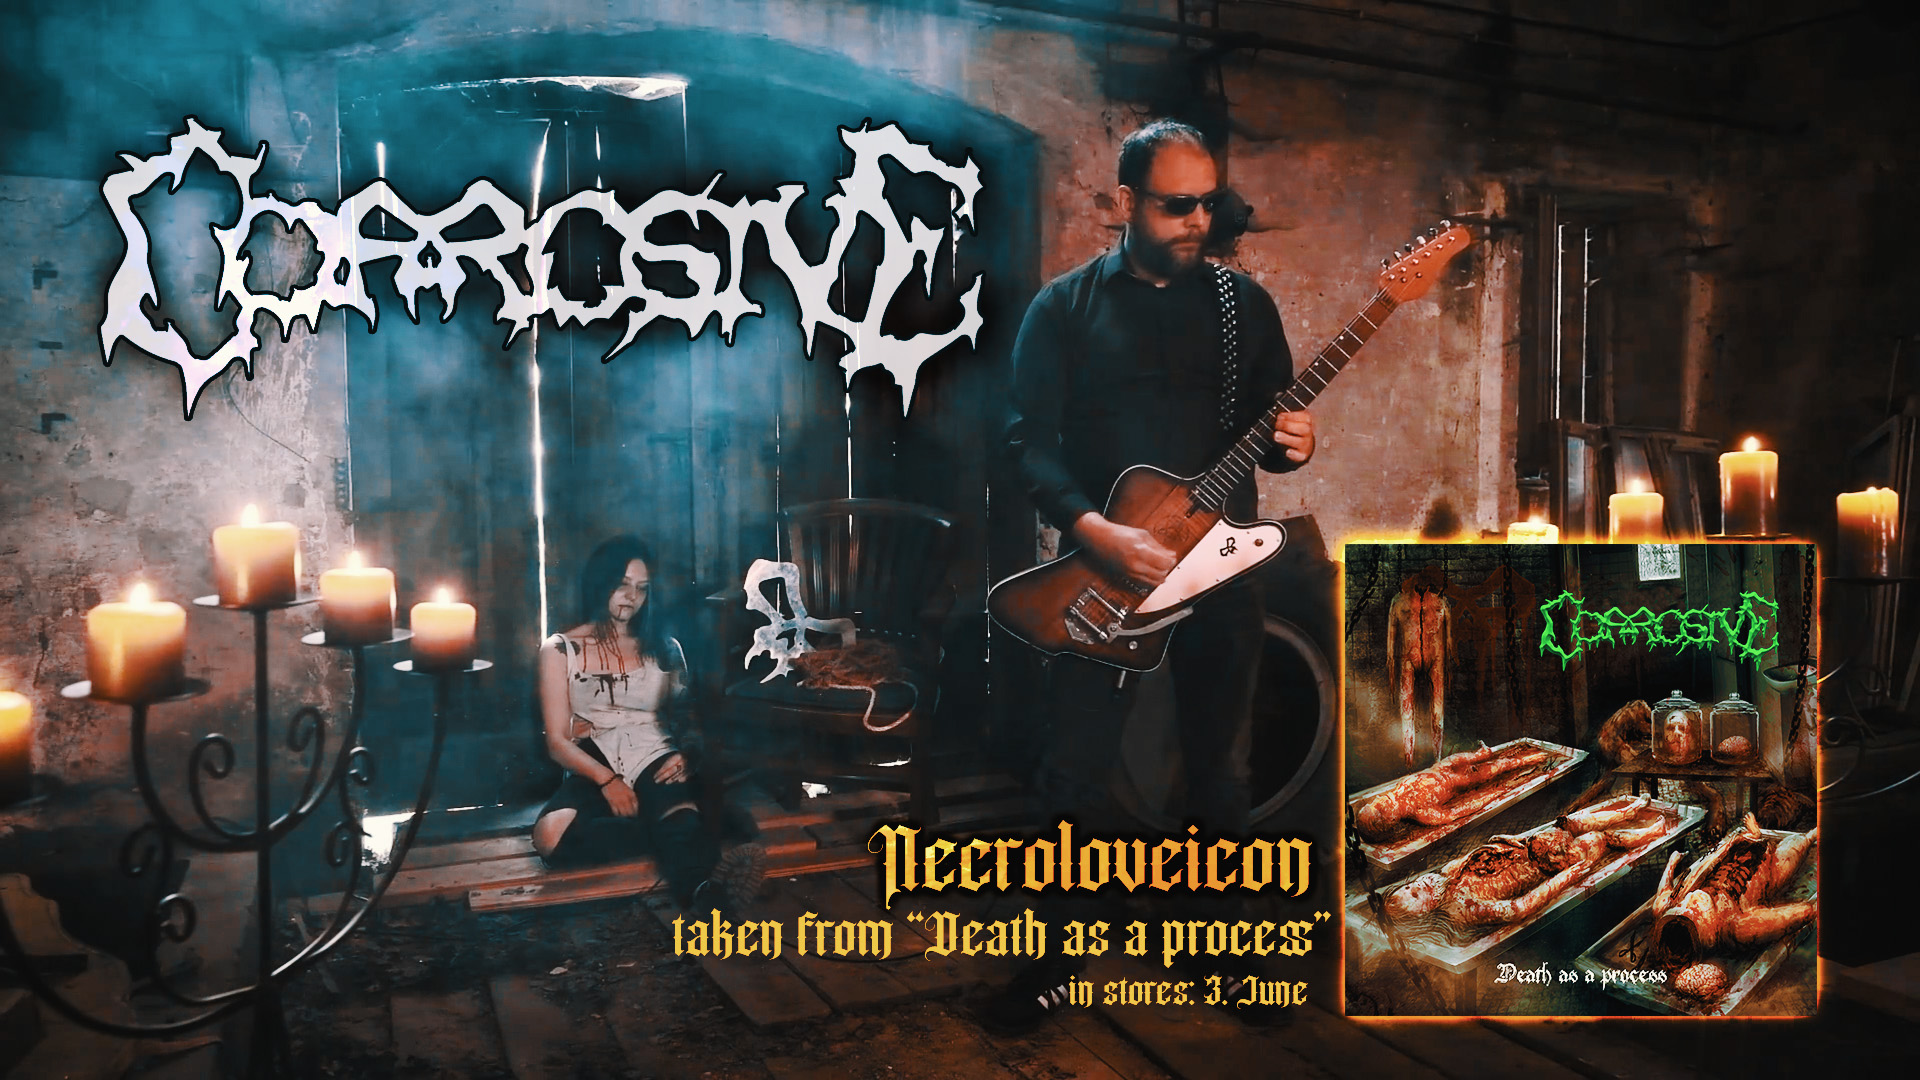 corrosive-neue-single-necroloveicon-video-online